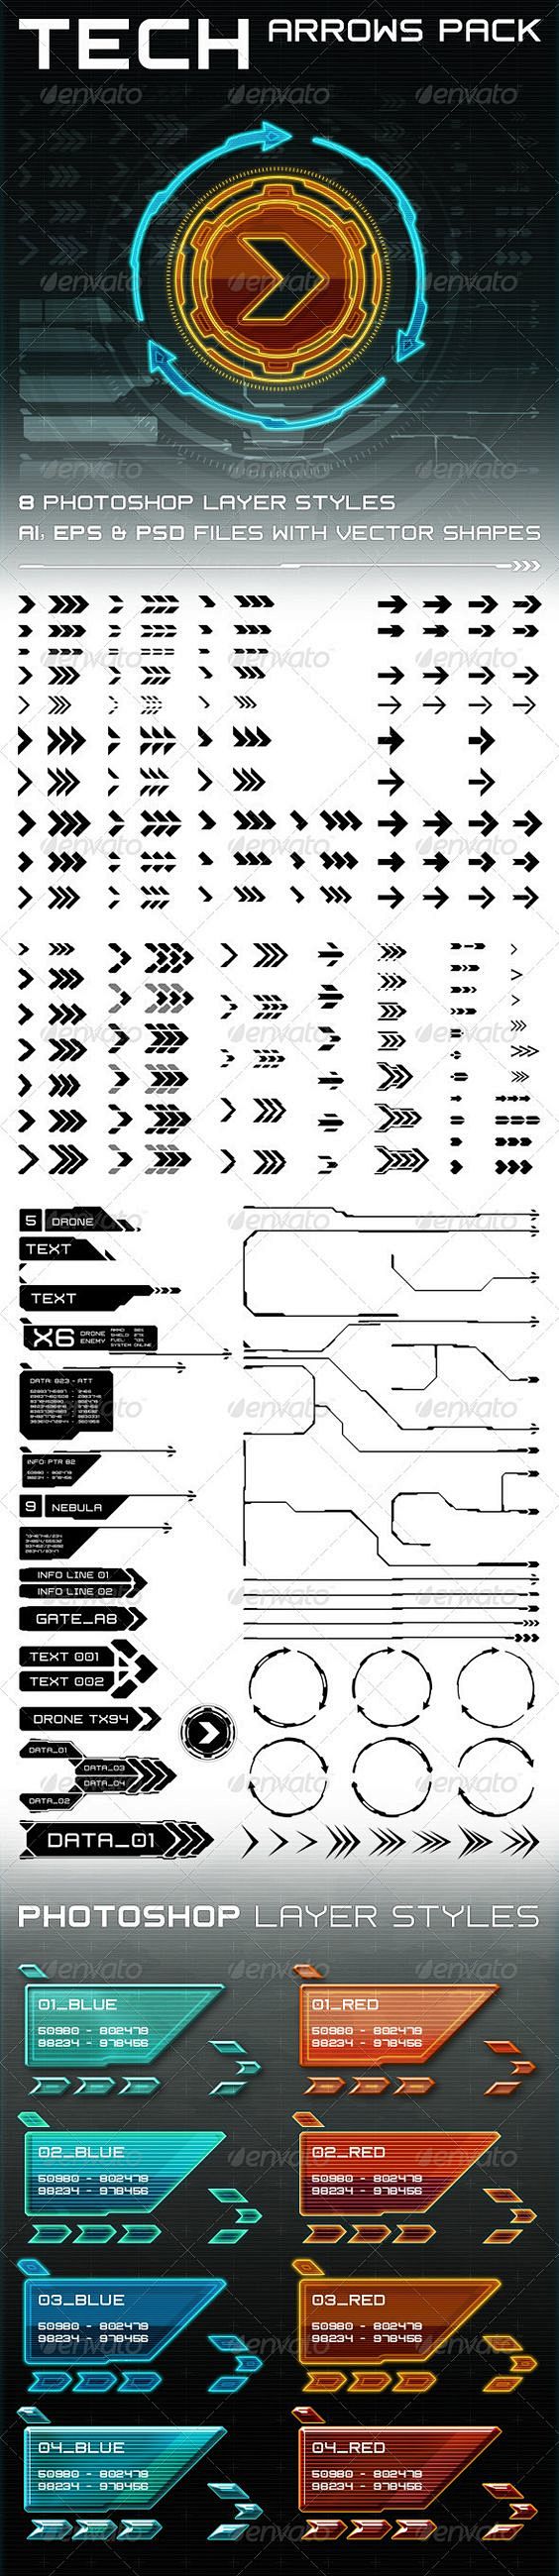 Tech Arrows Pack by ...